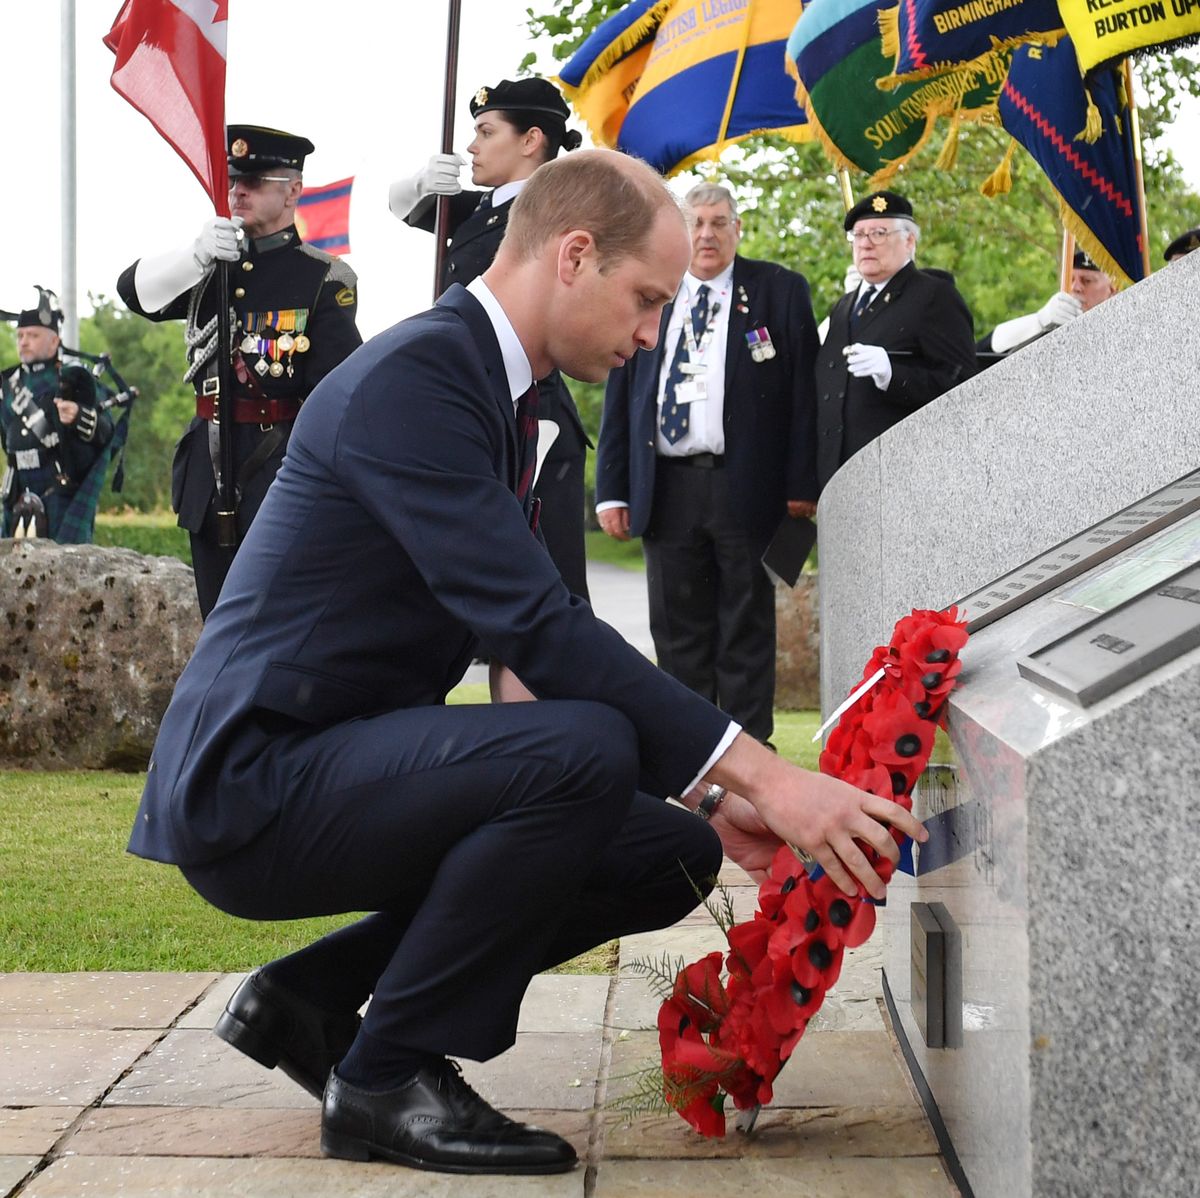 prince william king george vi speech Duke Of Cambridge Attends D-Day Commemoration Service In Staffordshire